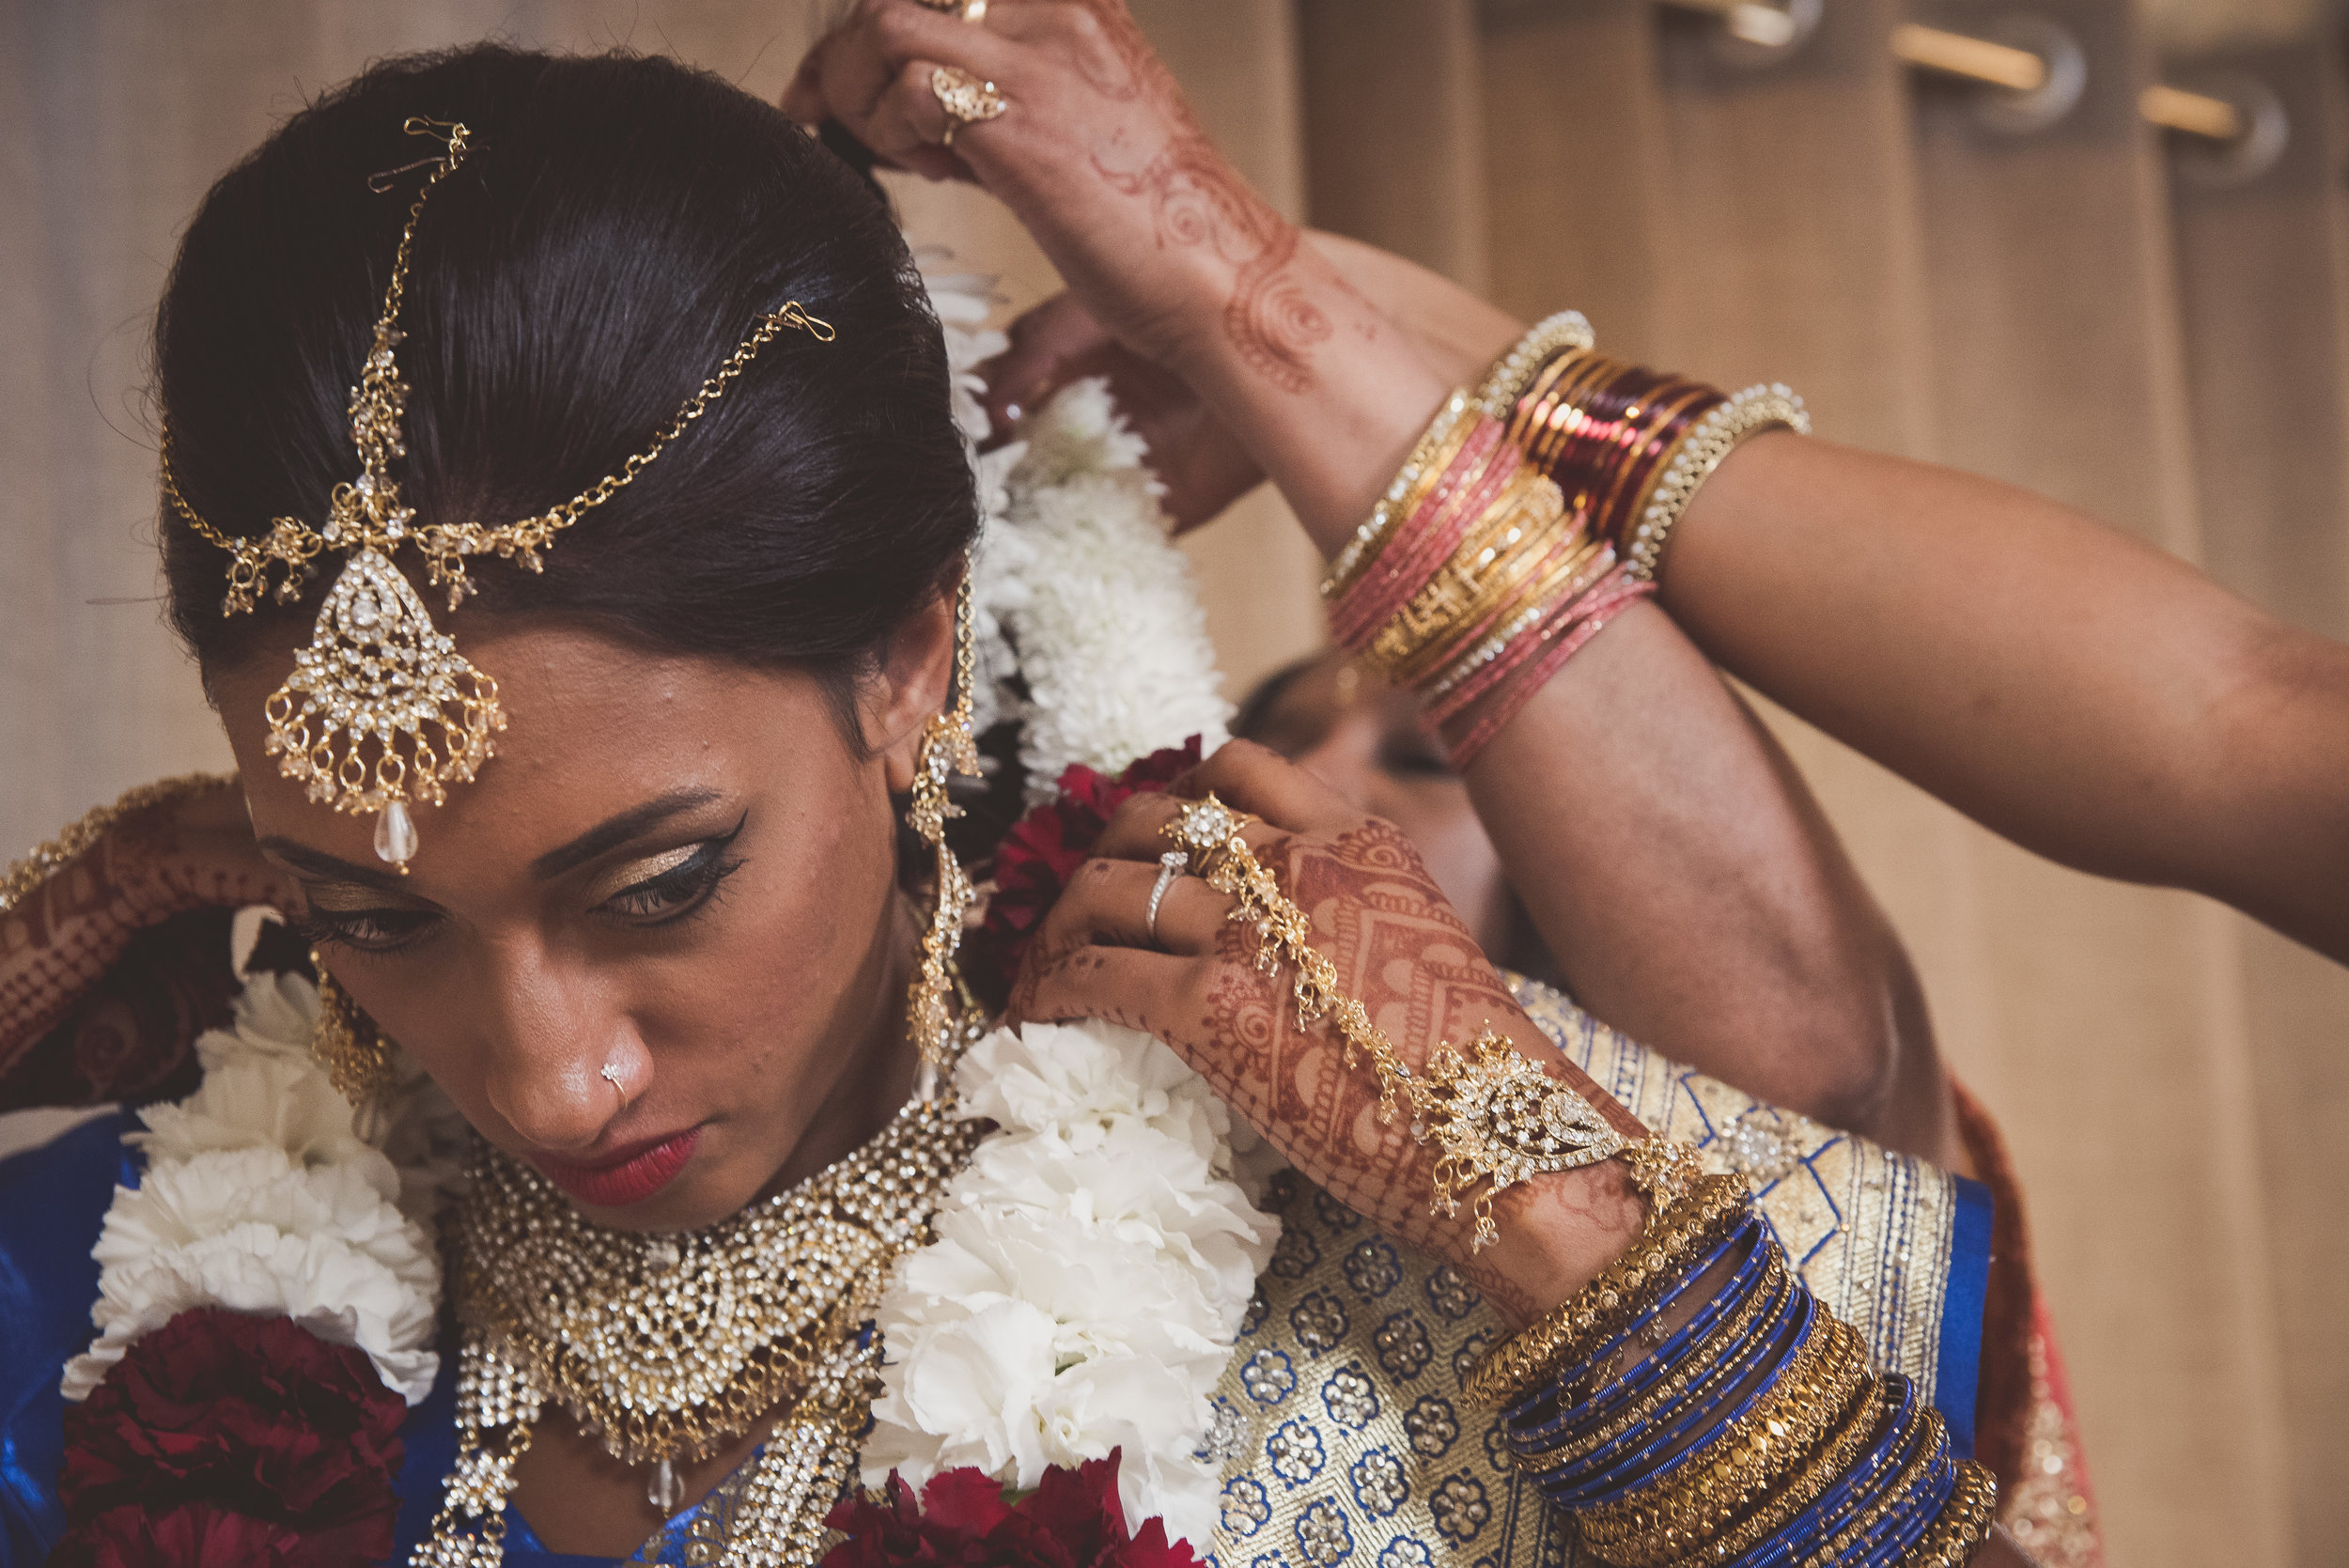 Hindu bride puts on garland for traditional Hindu wedding ceremony